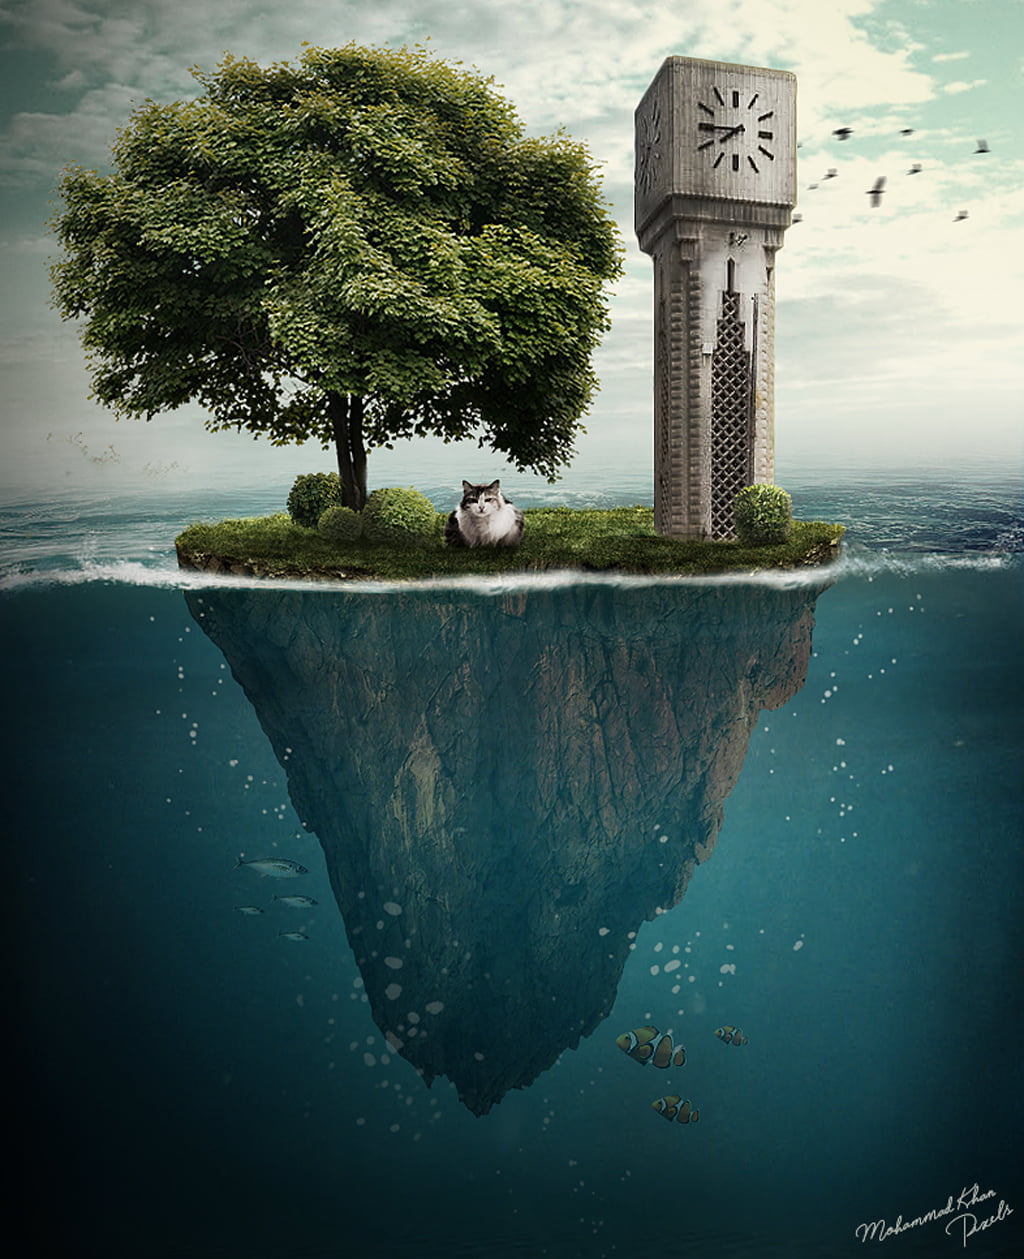 tower clock, MohammadKhan, nature, island, sea, cat, photo manipulation